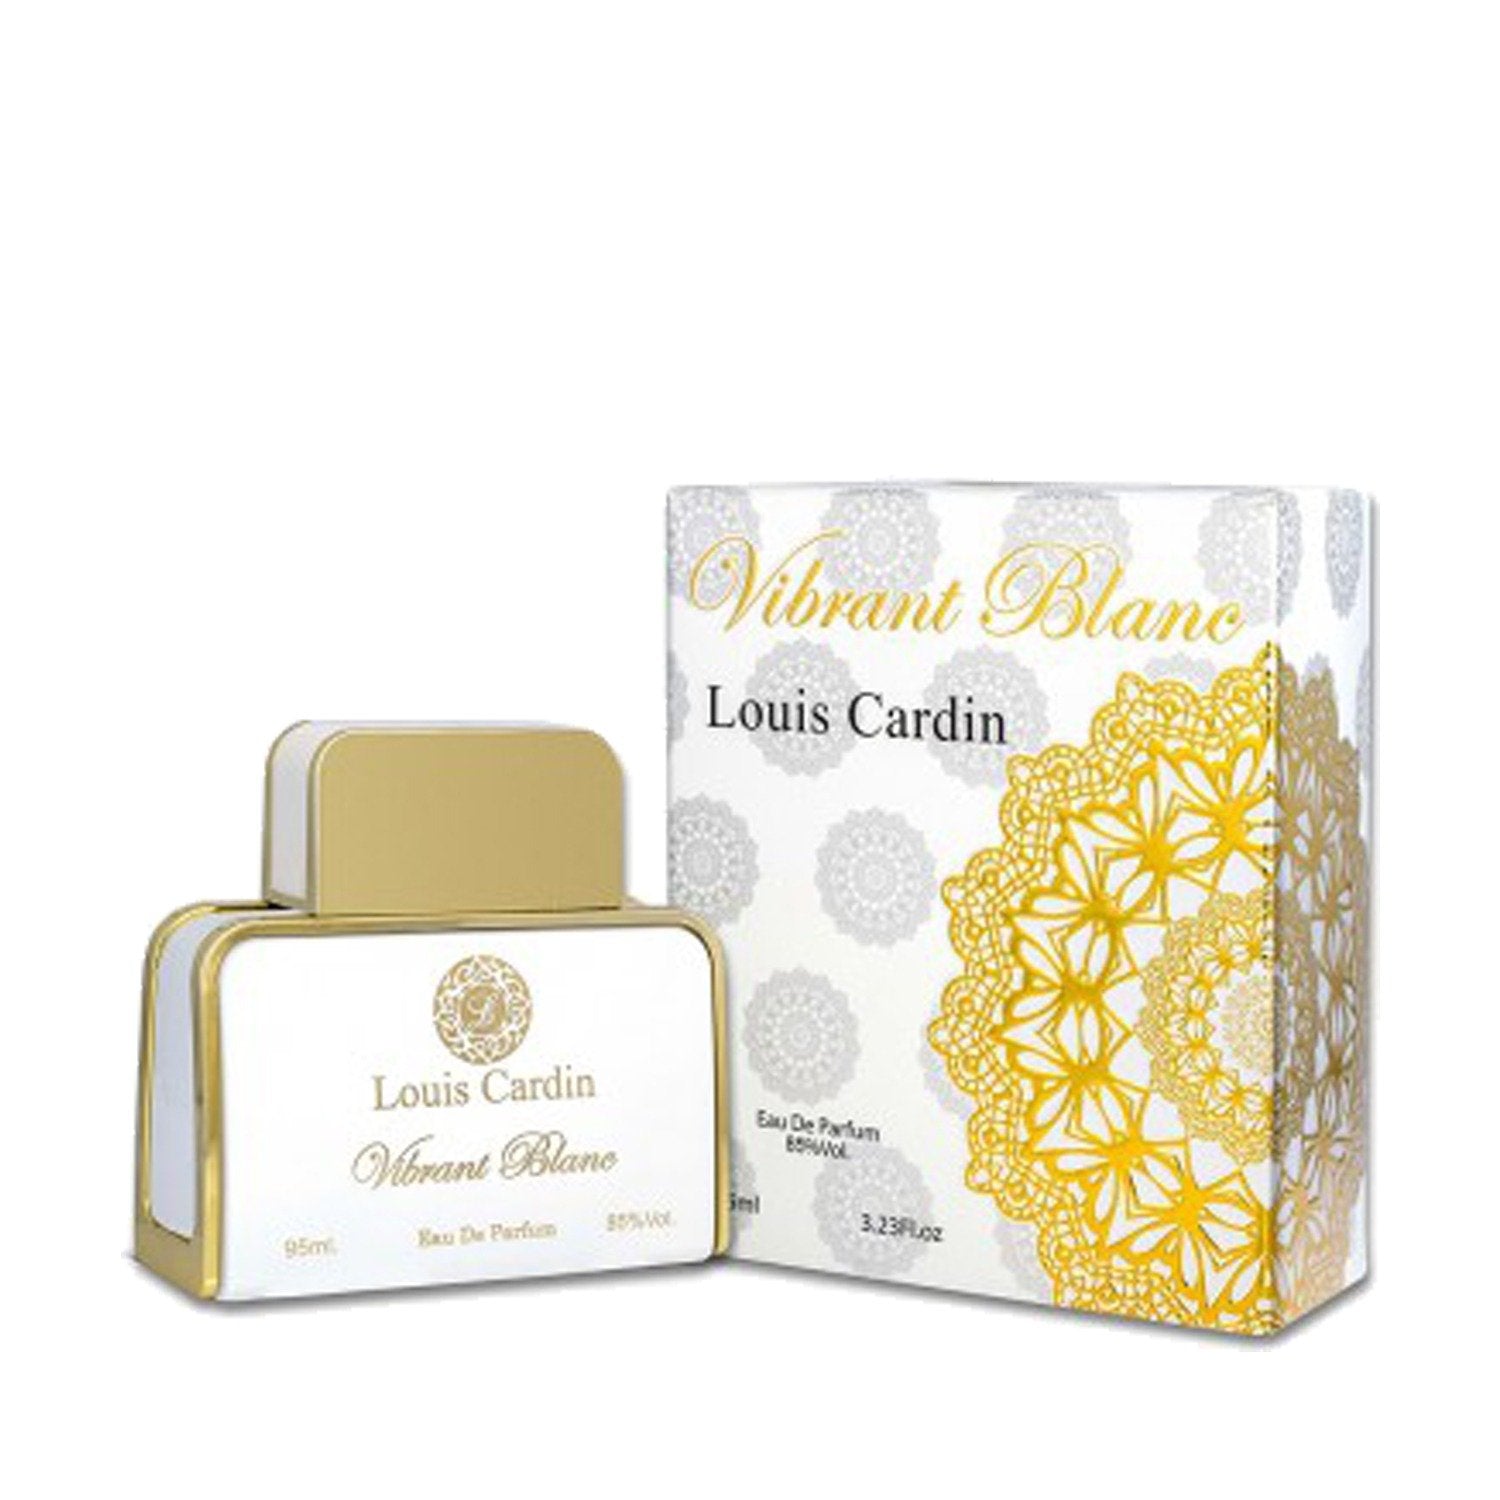 Buy Louis Cardin Bundle Offer Of Sacred EDP Perfume 100ml